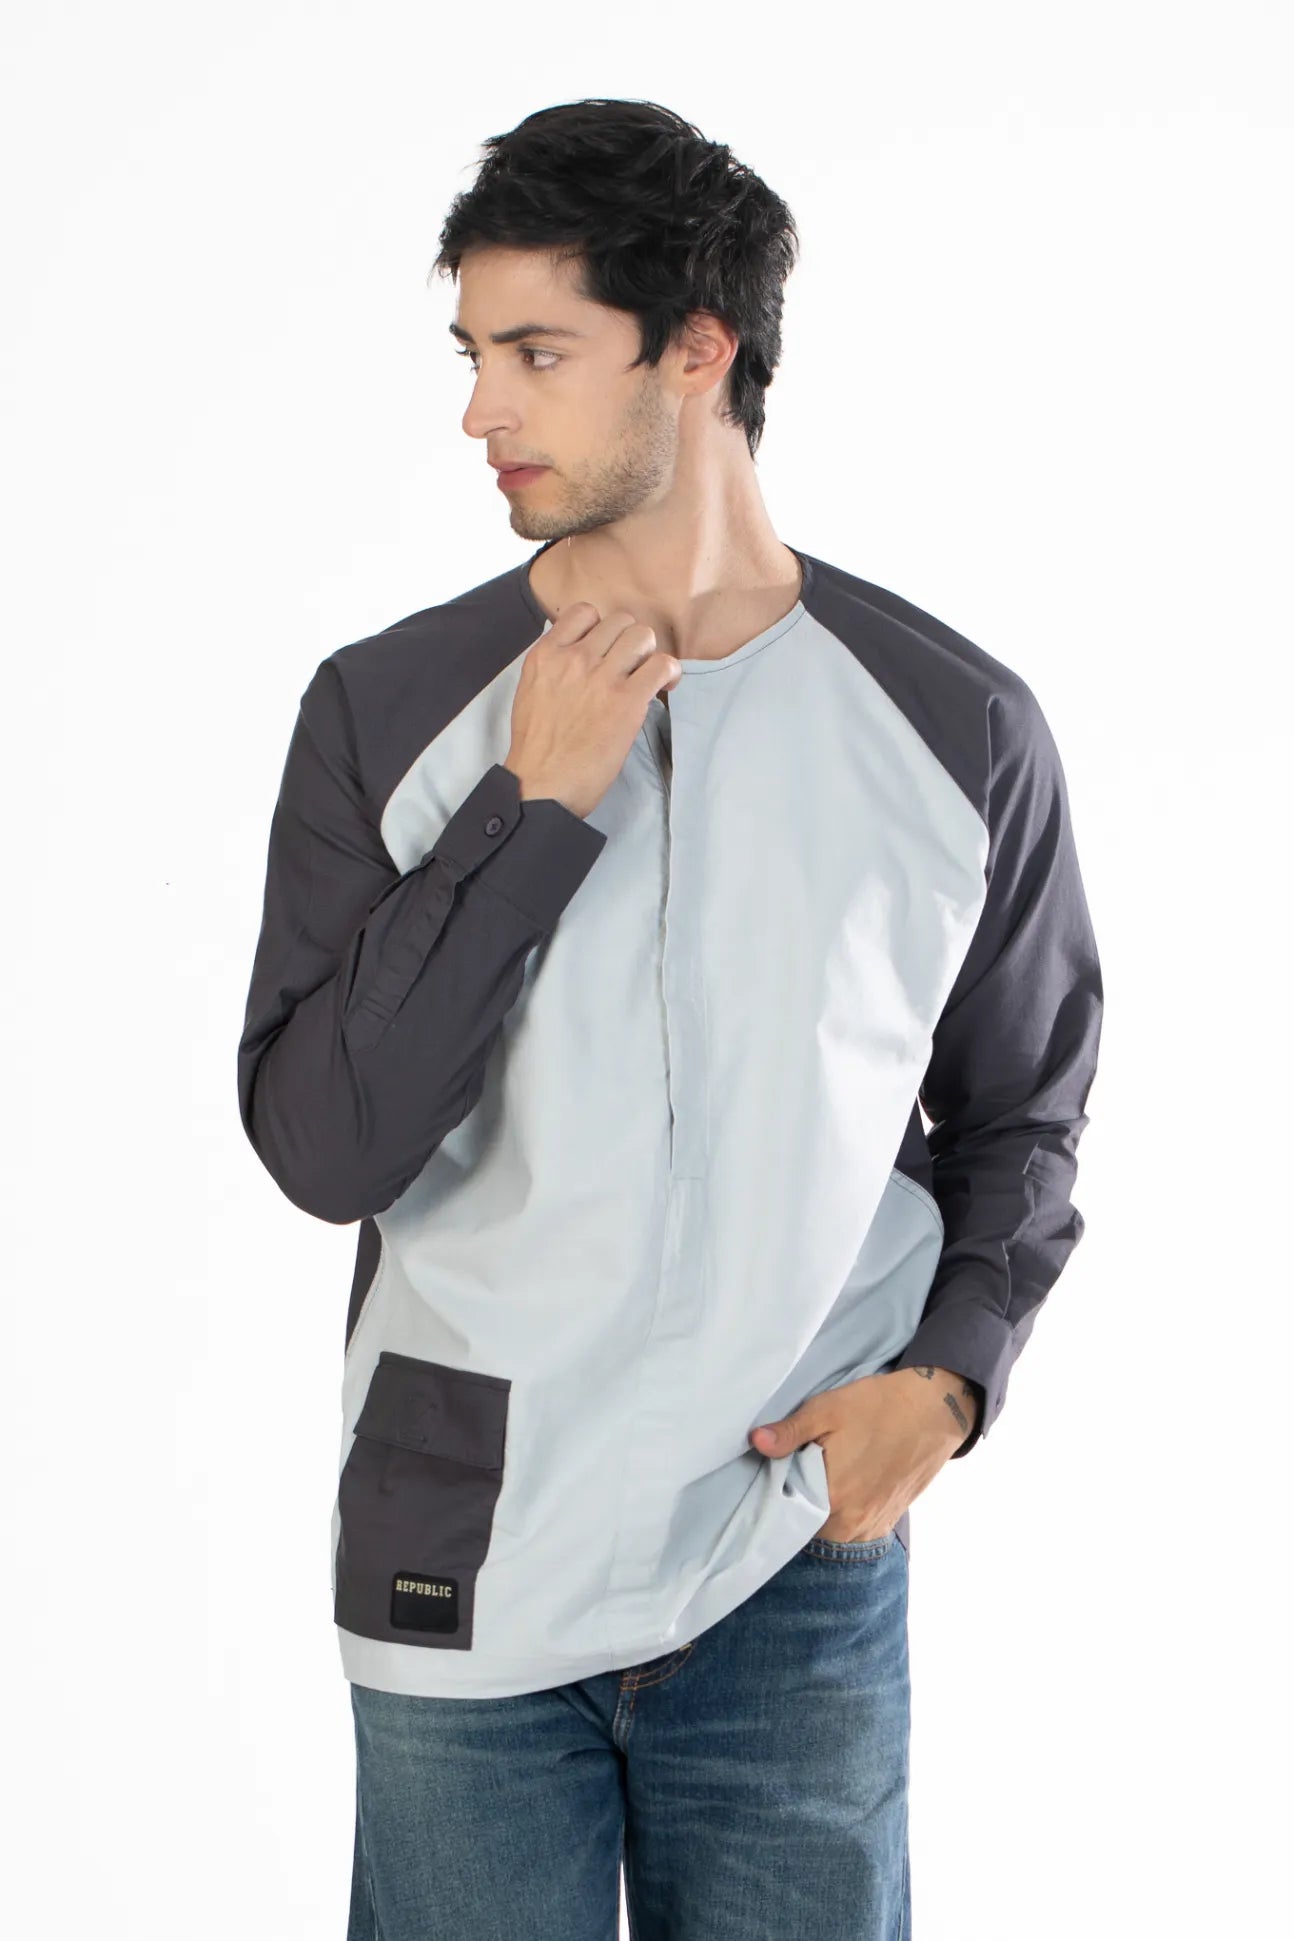 Buy Round Neck Raglan Sleeve Shirt Online.